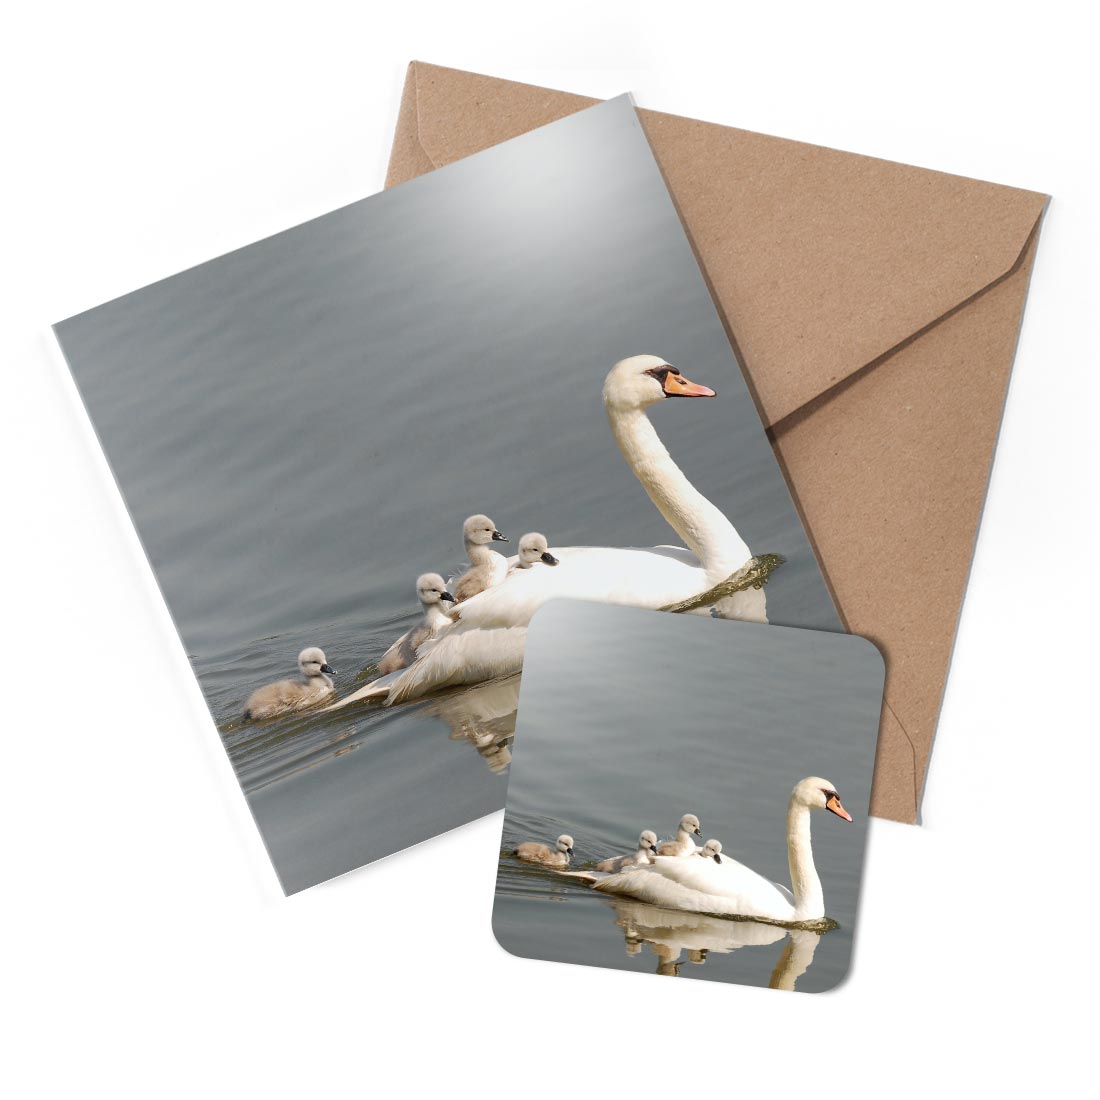 1 x Greeting Card & Coaster Set - Baby Swan Cute Birds #50170